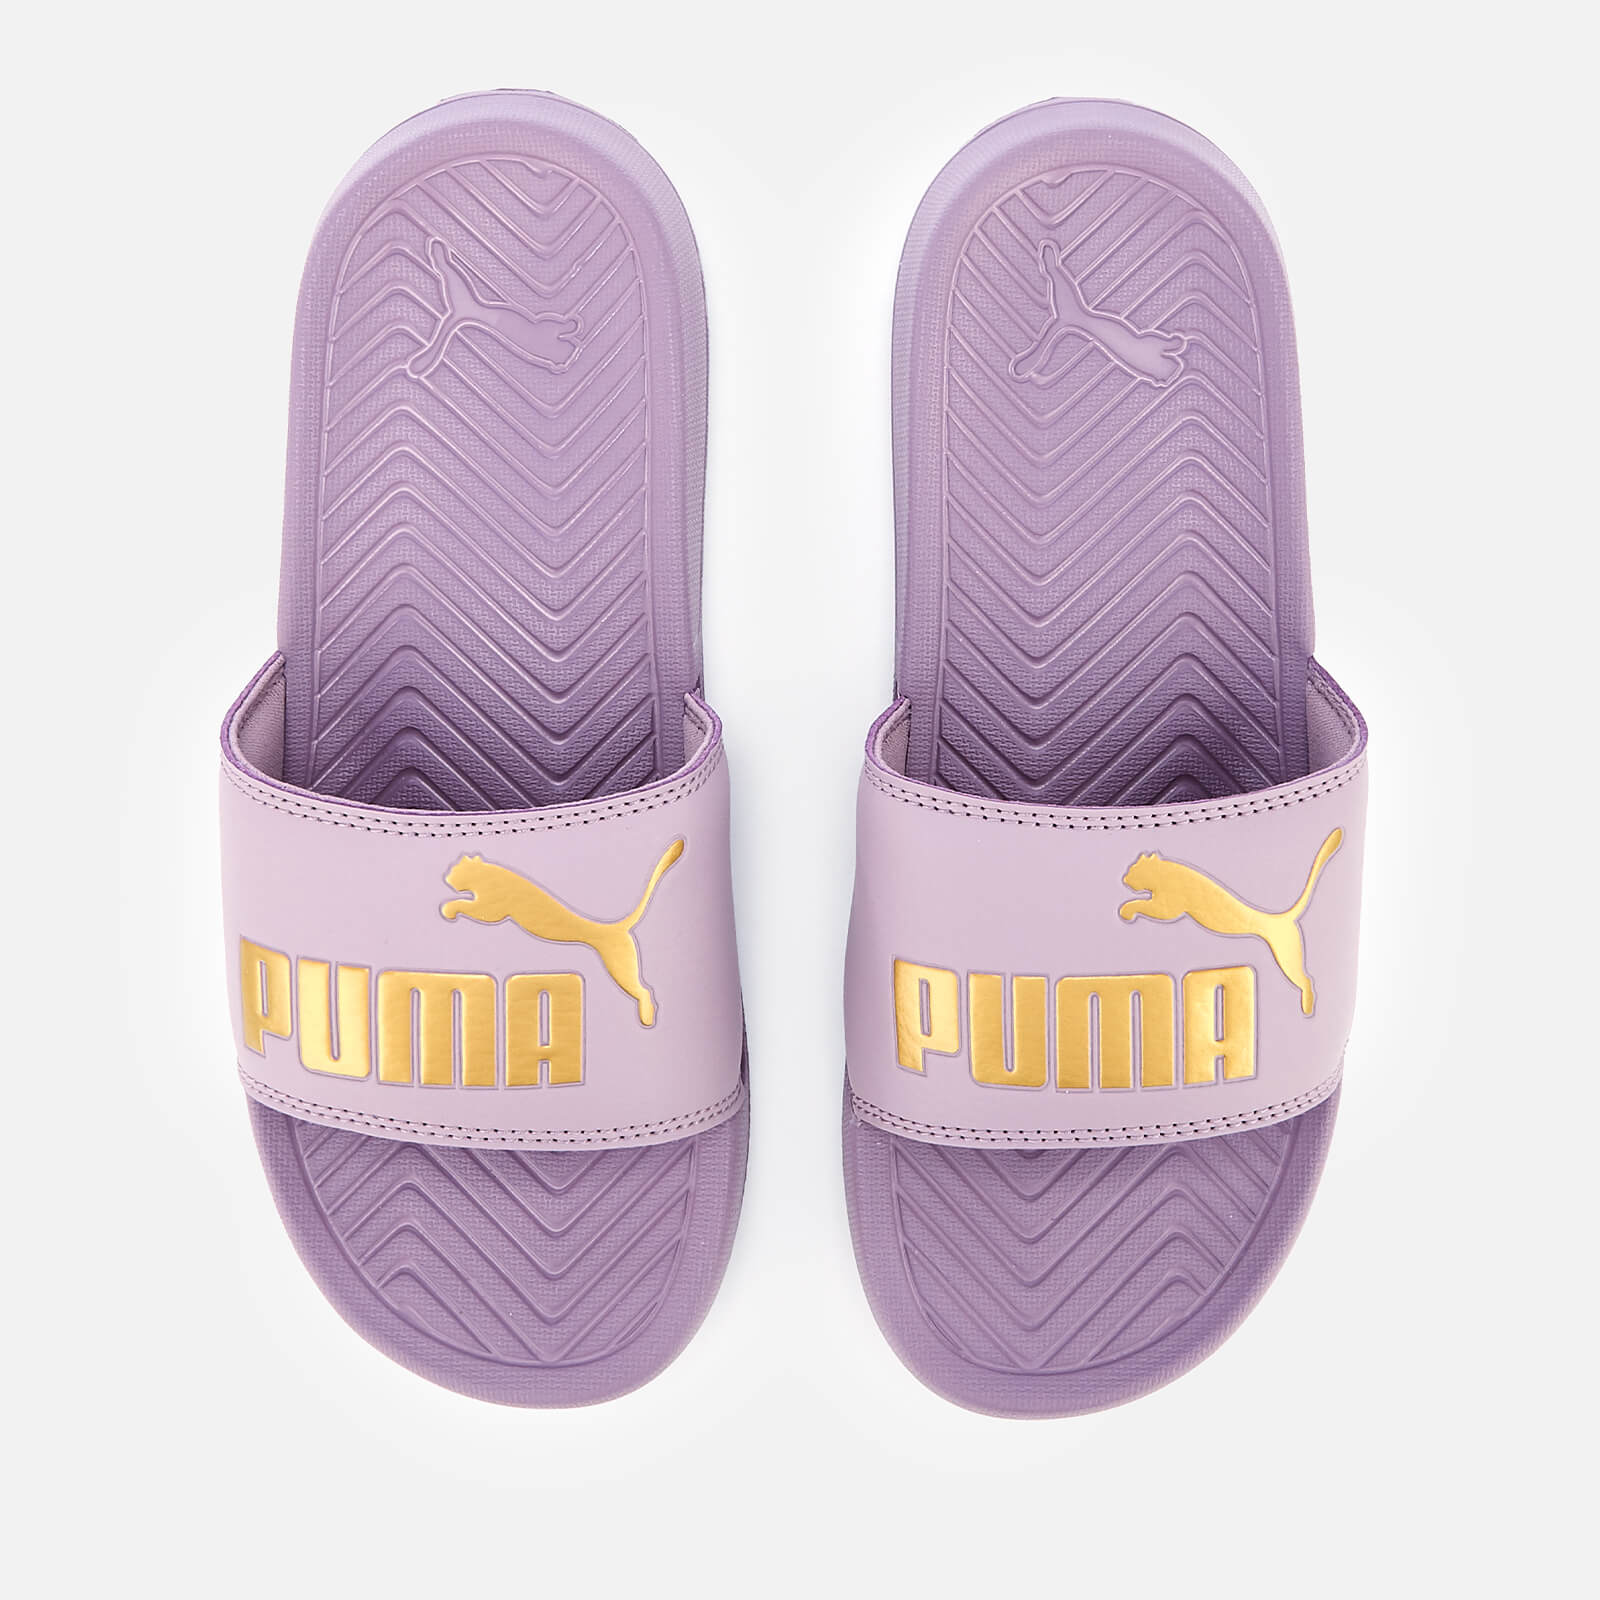 Puma sandals women purple